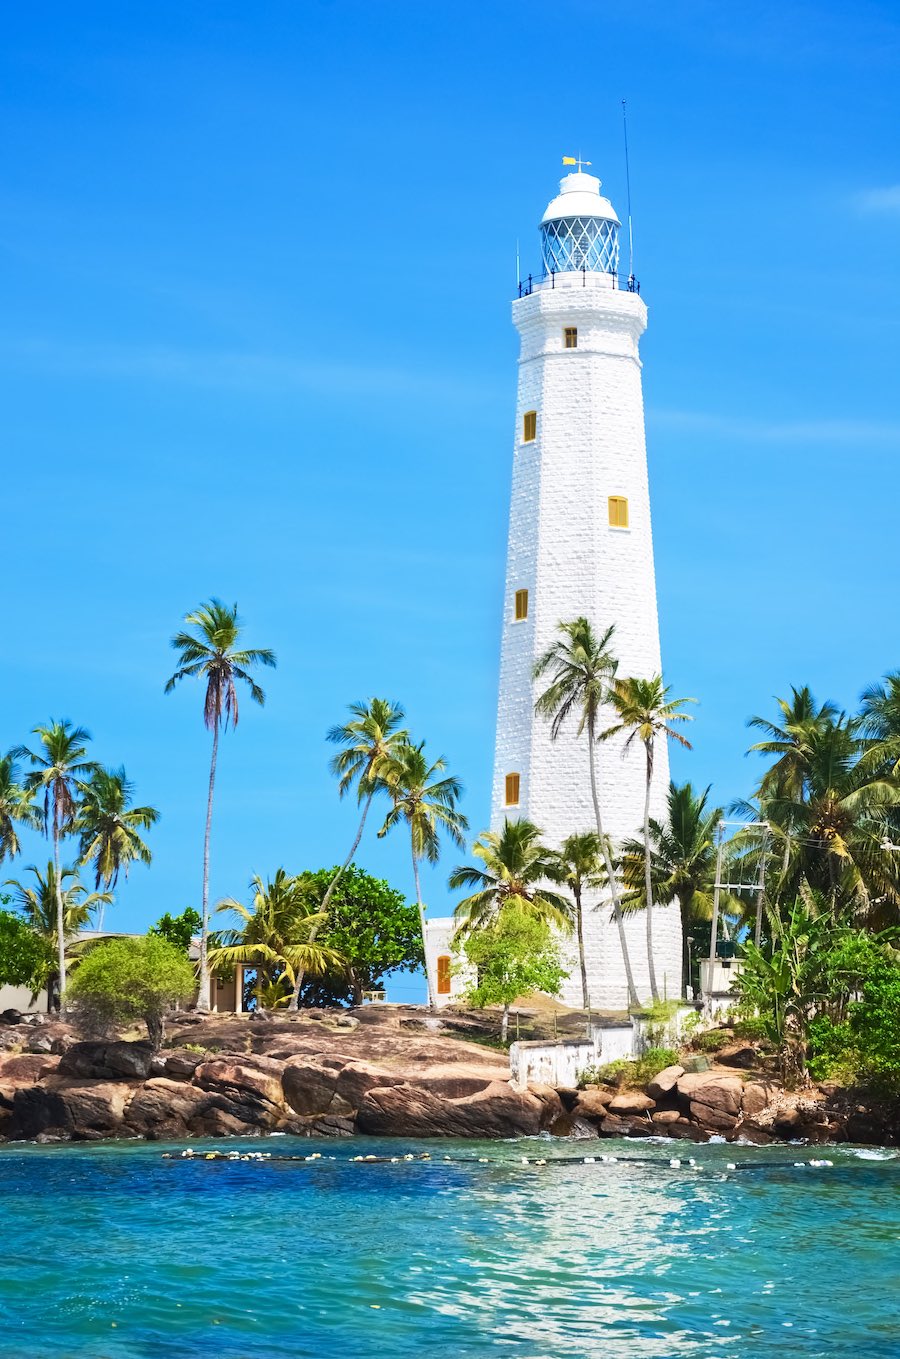 Sri Lanka Dondra Head Lighthouse Copyright © AdobeStock 86805460 eranda